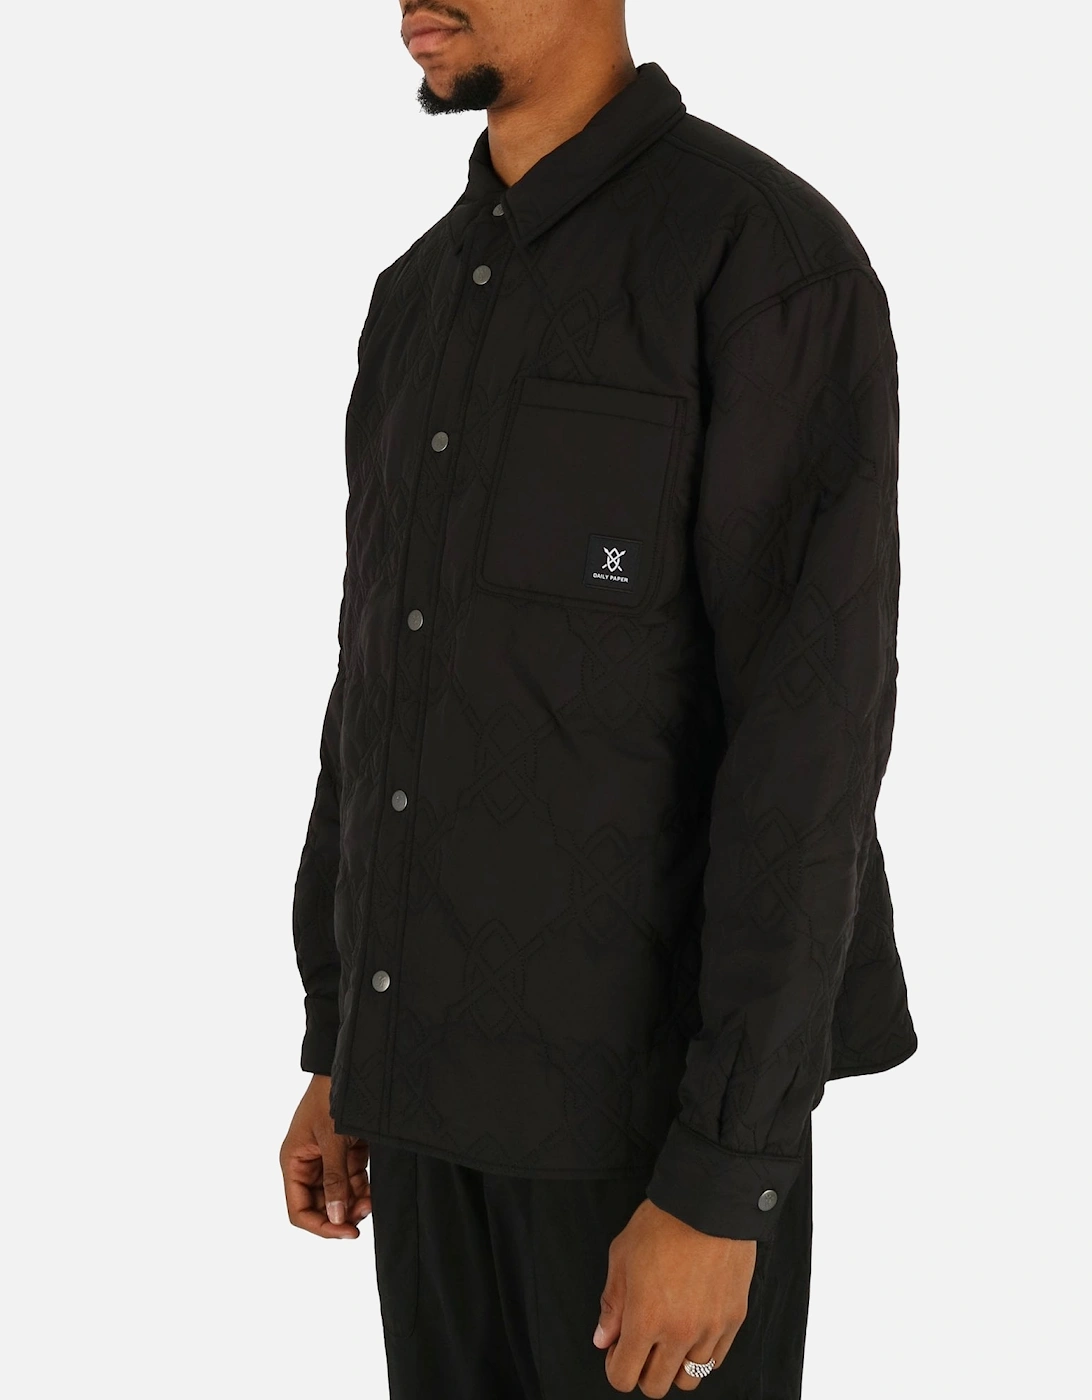 Rajub Embroidered Sheild Black Overshirt Jacket